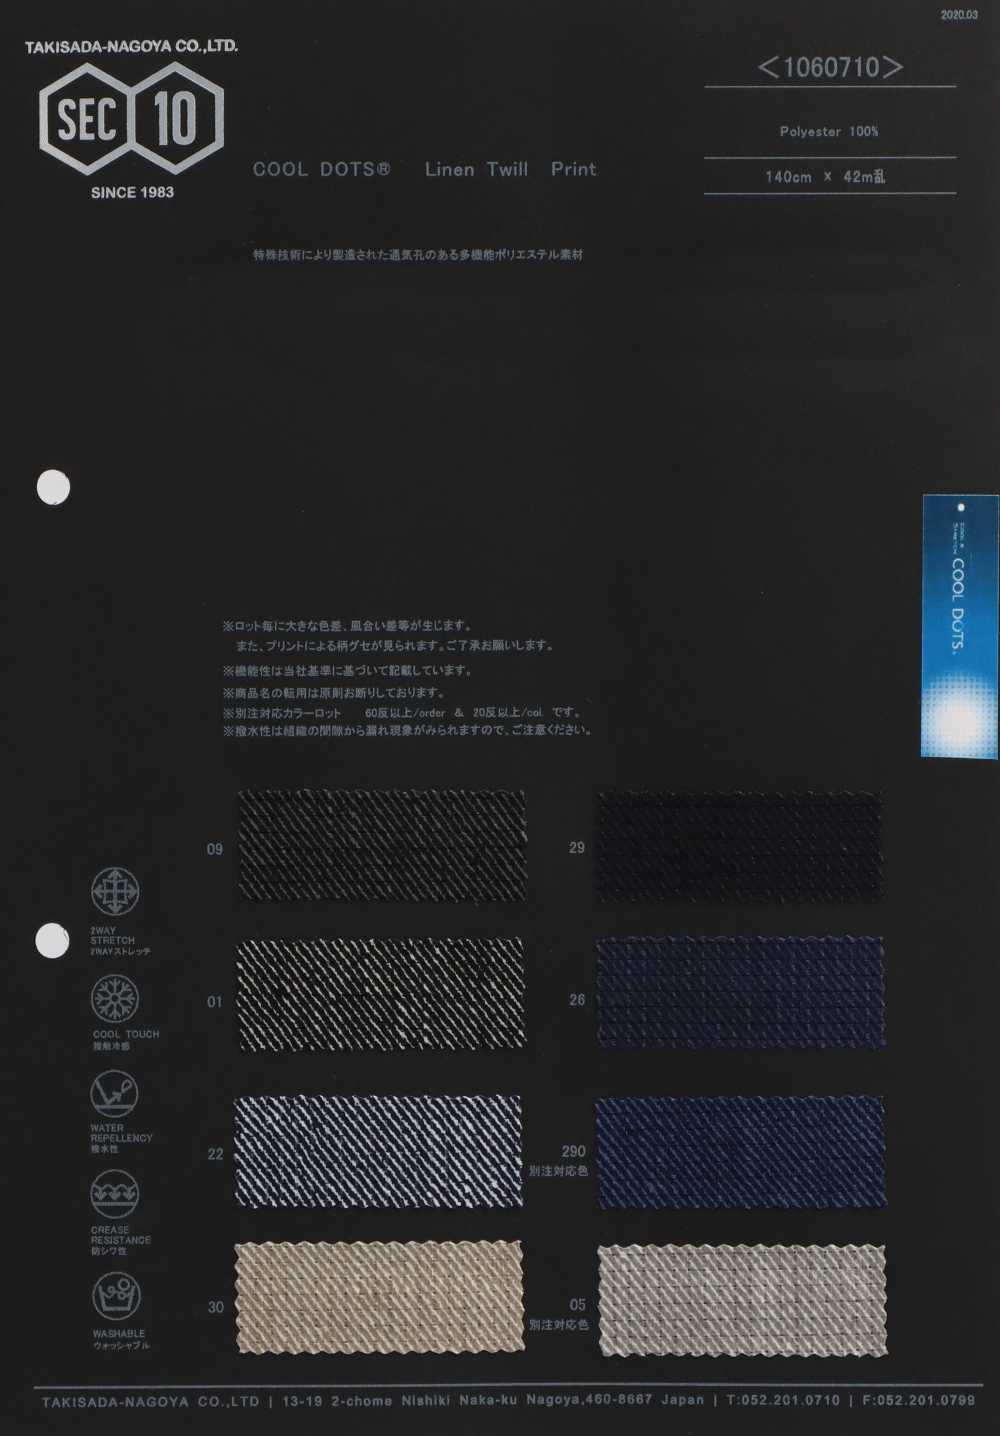 1060710 COOLDOTS Kersey Print[Textile / Fabric] Takisada Nagoya